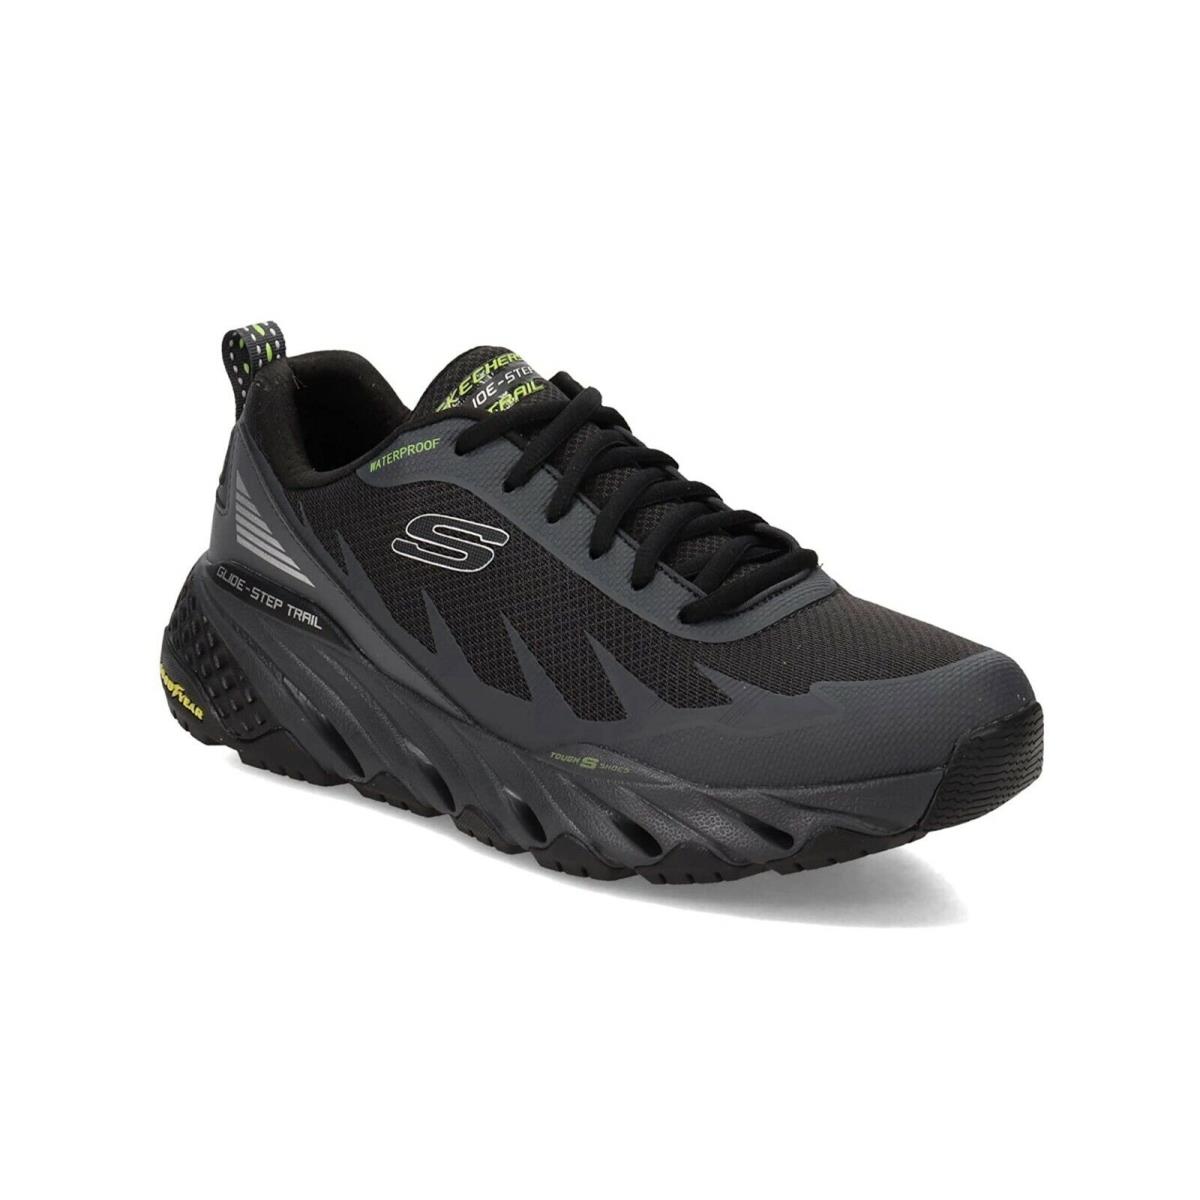 Skechers X Goodyear Men Glide-step Trail Botanic Charcoal Mesh Shoes Waterproof